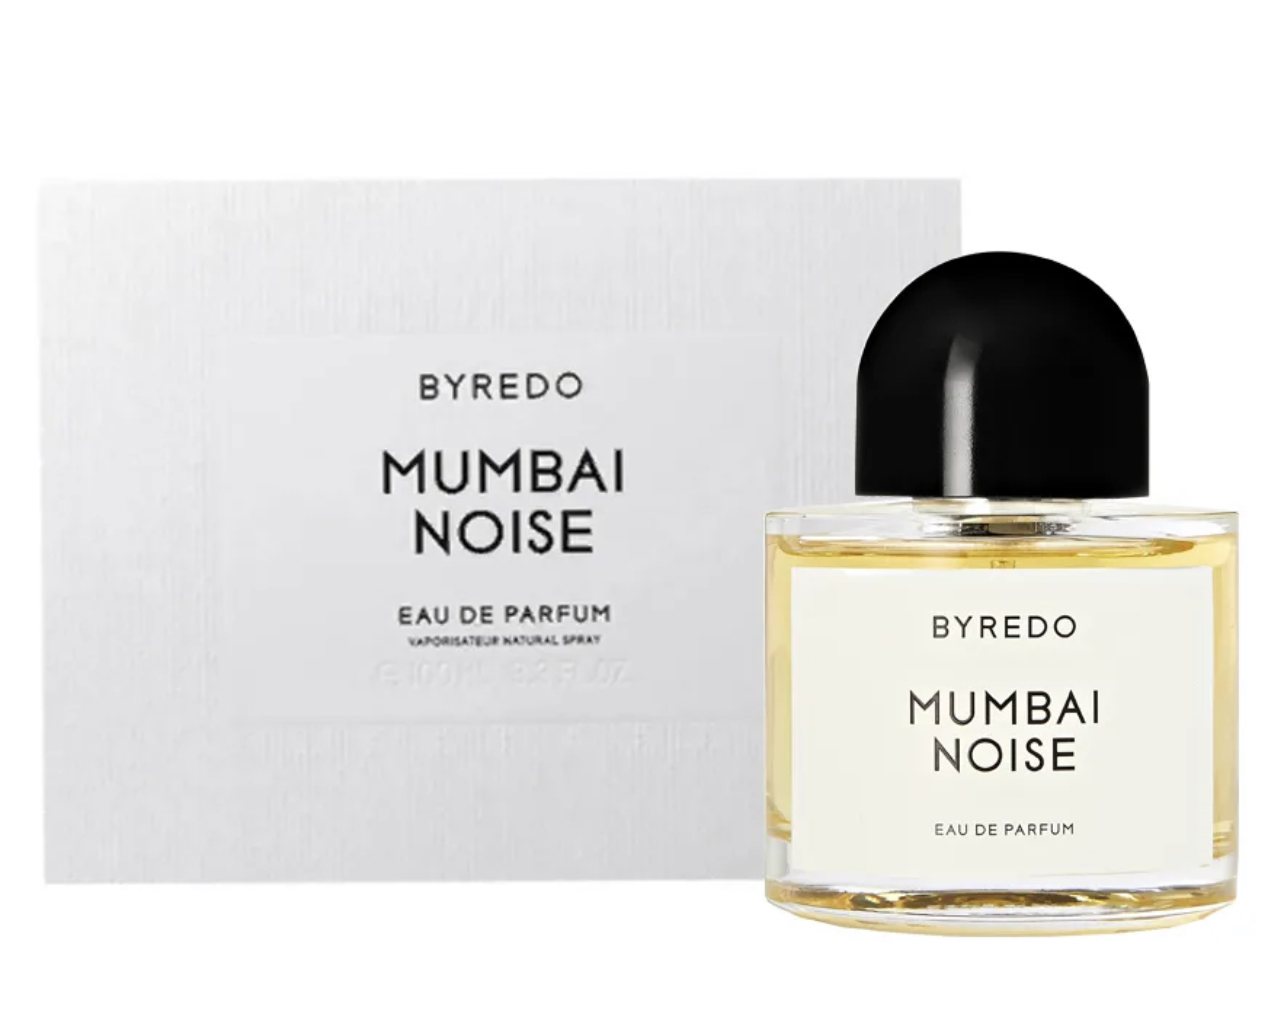 Byredo mumbai noise. Духи Byredo Mumbai. Byredo Parfums Mumbai Noise. Byredo Mumbai Noise Eau de Parfum.